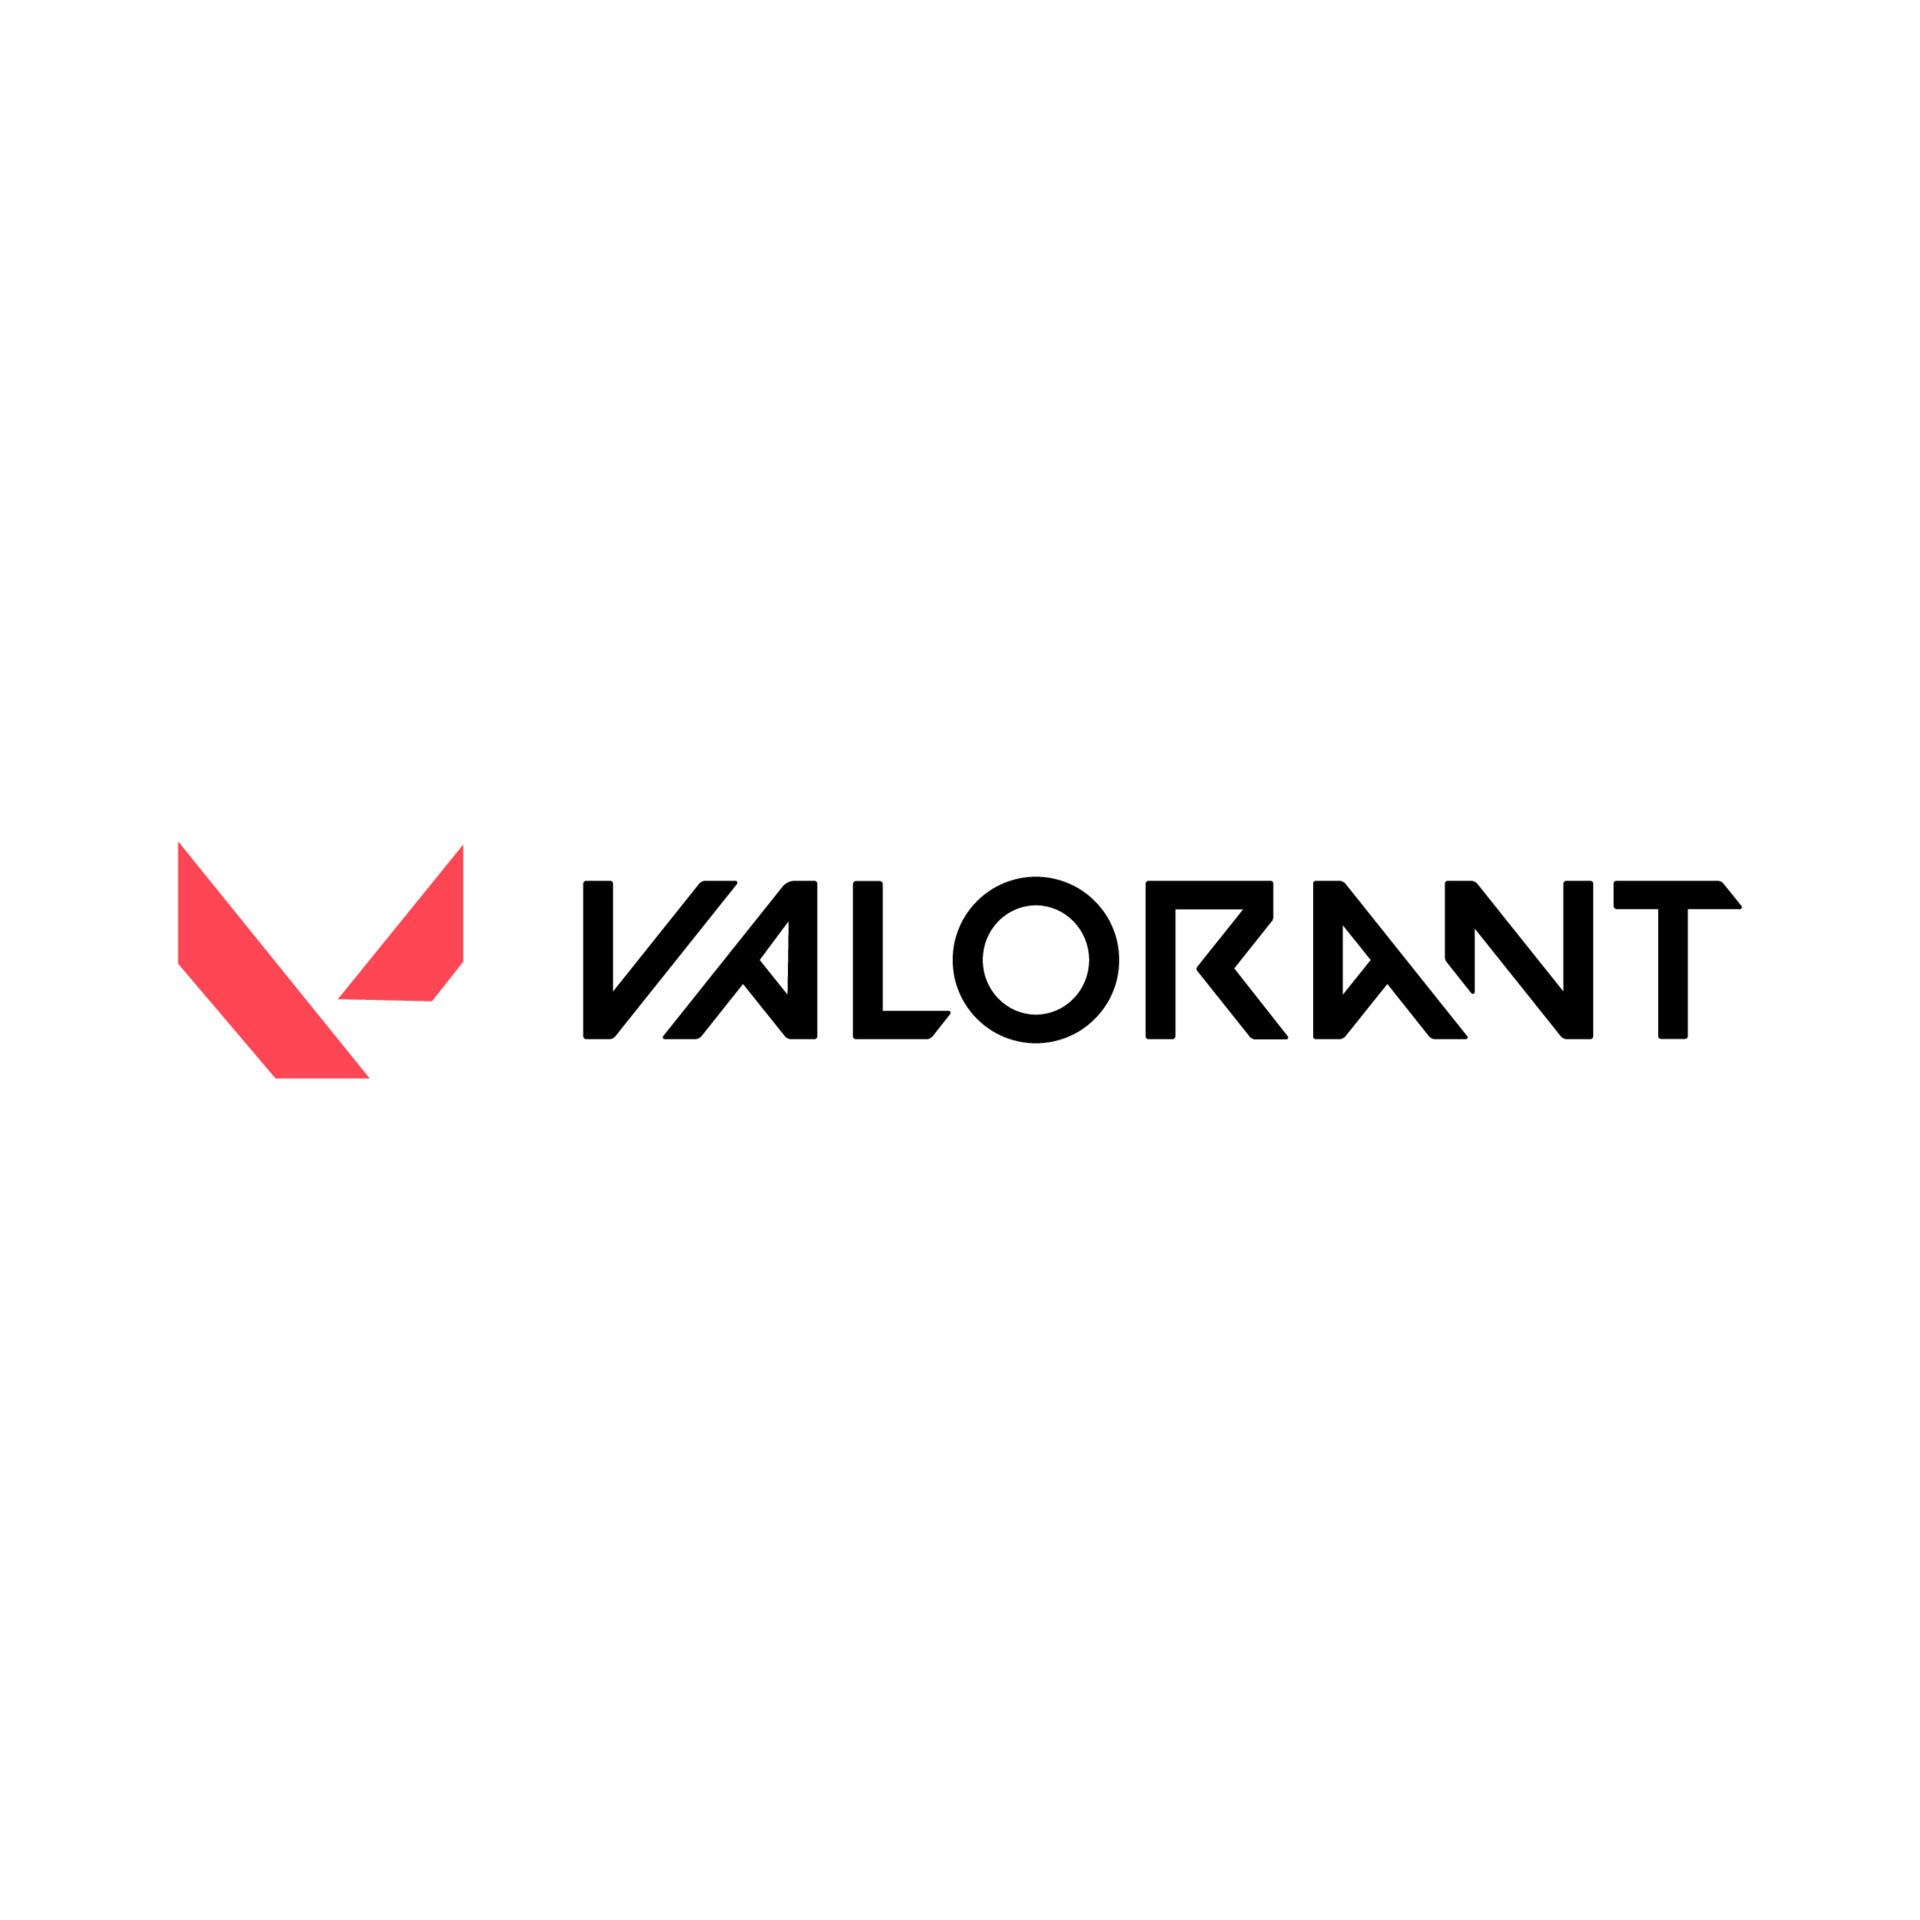 Valorant icon logo vector 19040322 Vector Art at Vecteezy